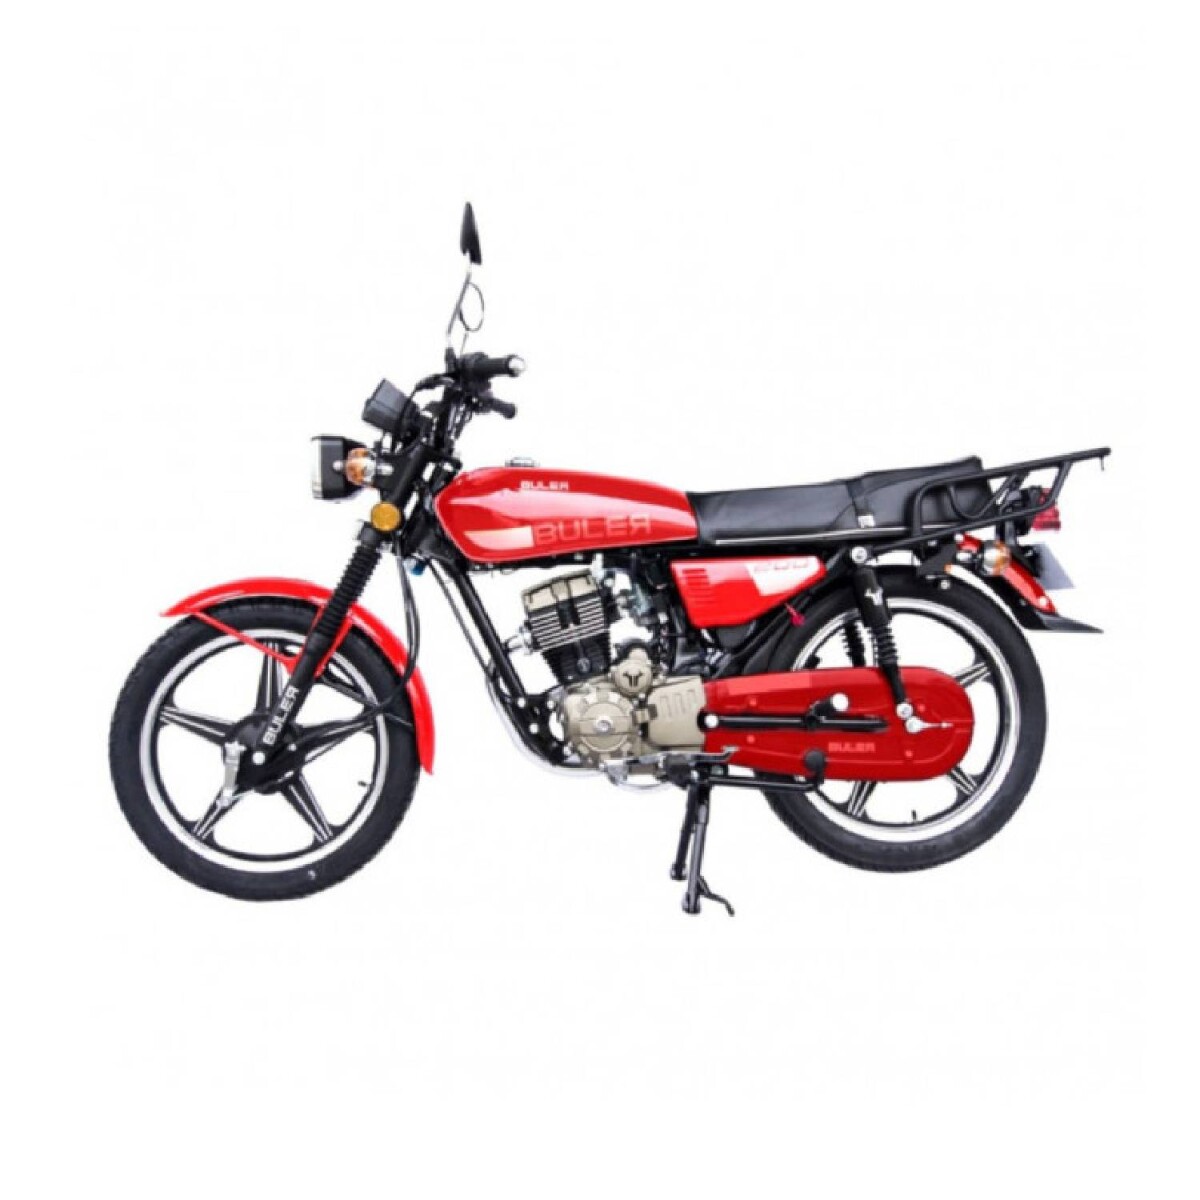 Motocicleta Buler Cobradora CG200 - Rojo 